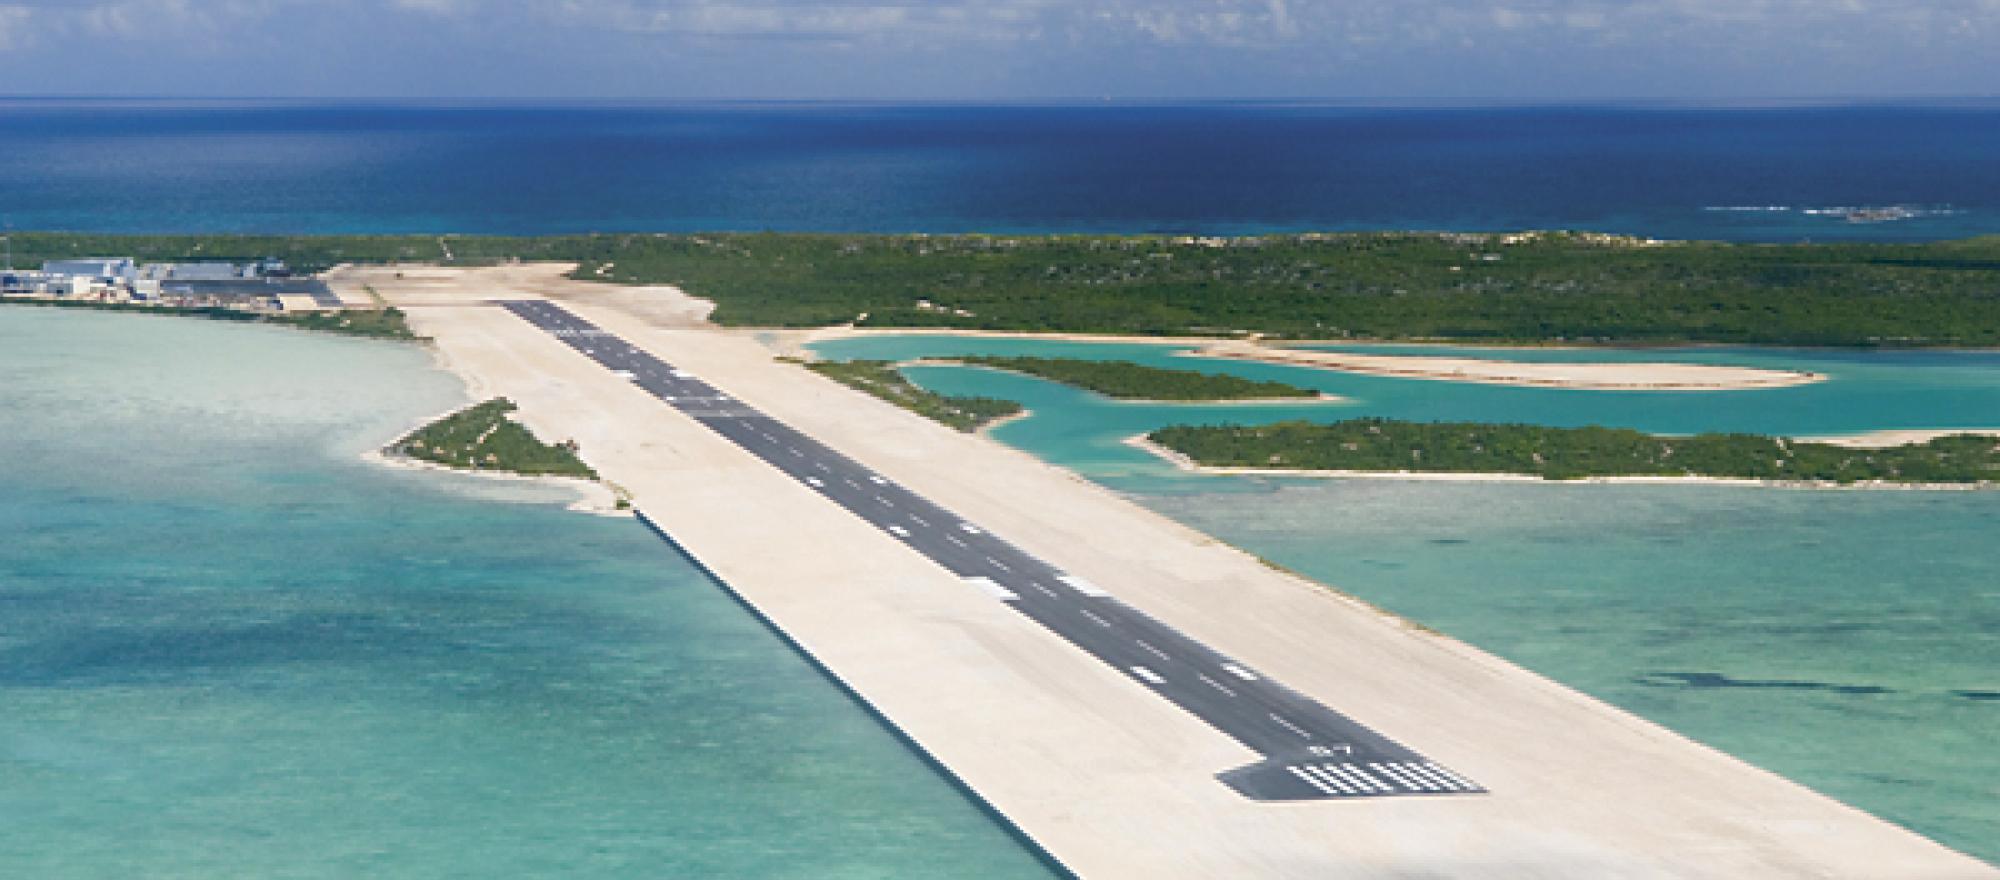 Runway at Ambergris Cay is 5,700 feet long.